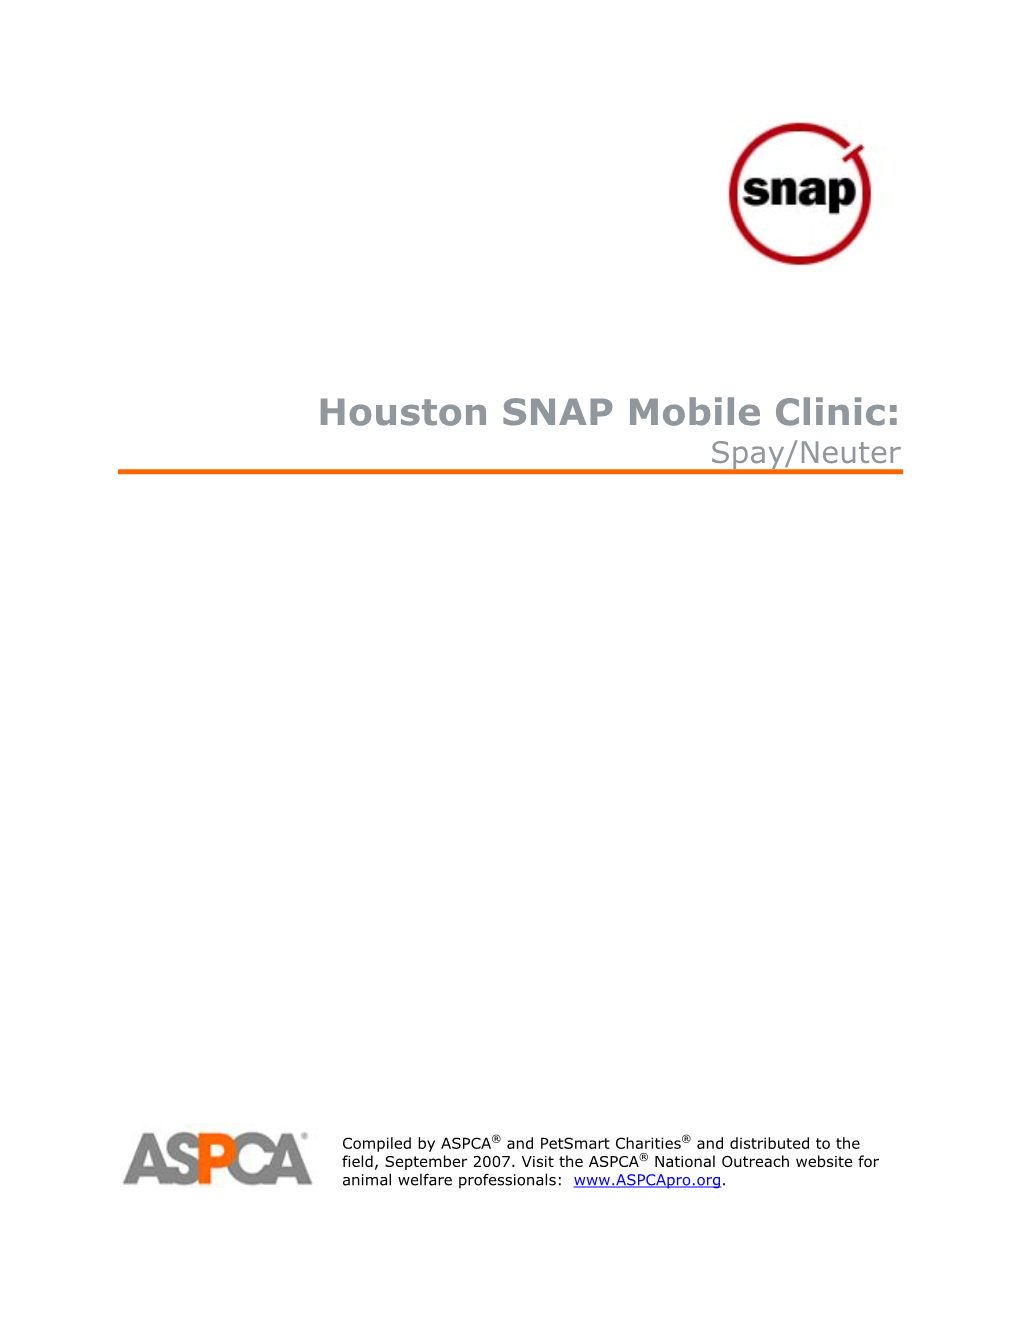 Houston SNAP Mobile Clinic: Spay/Neuter